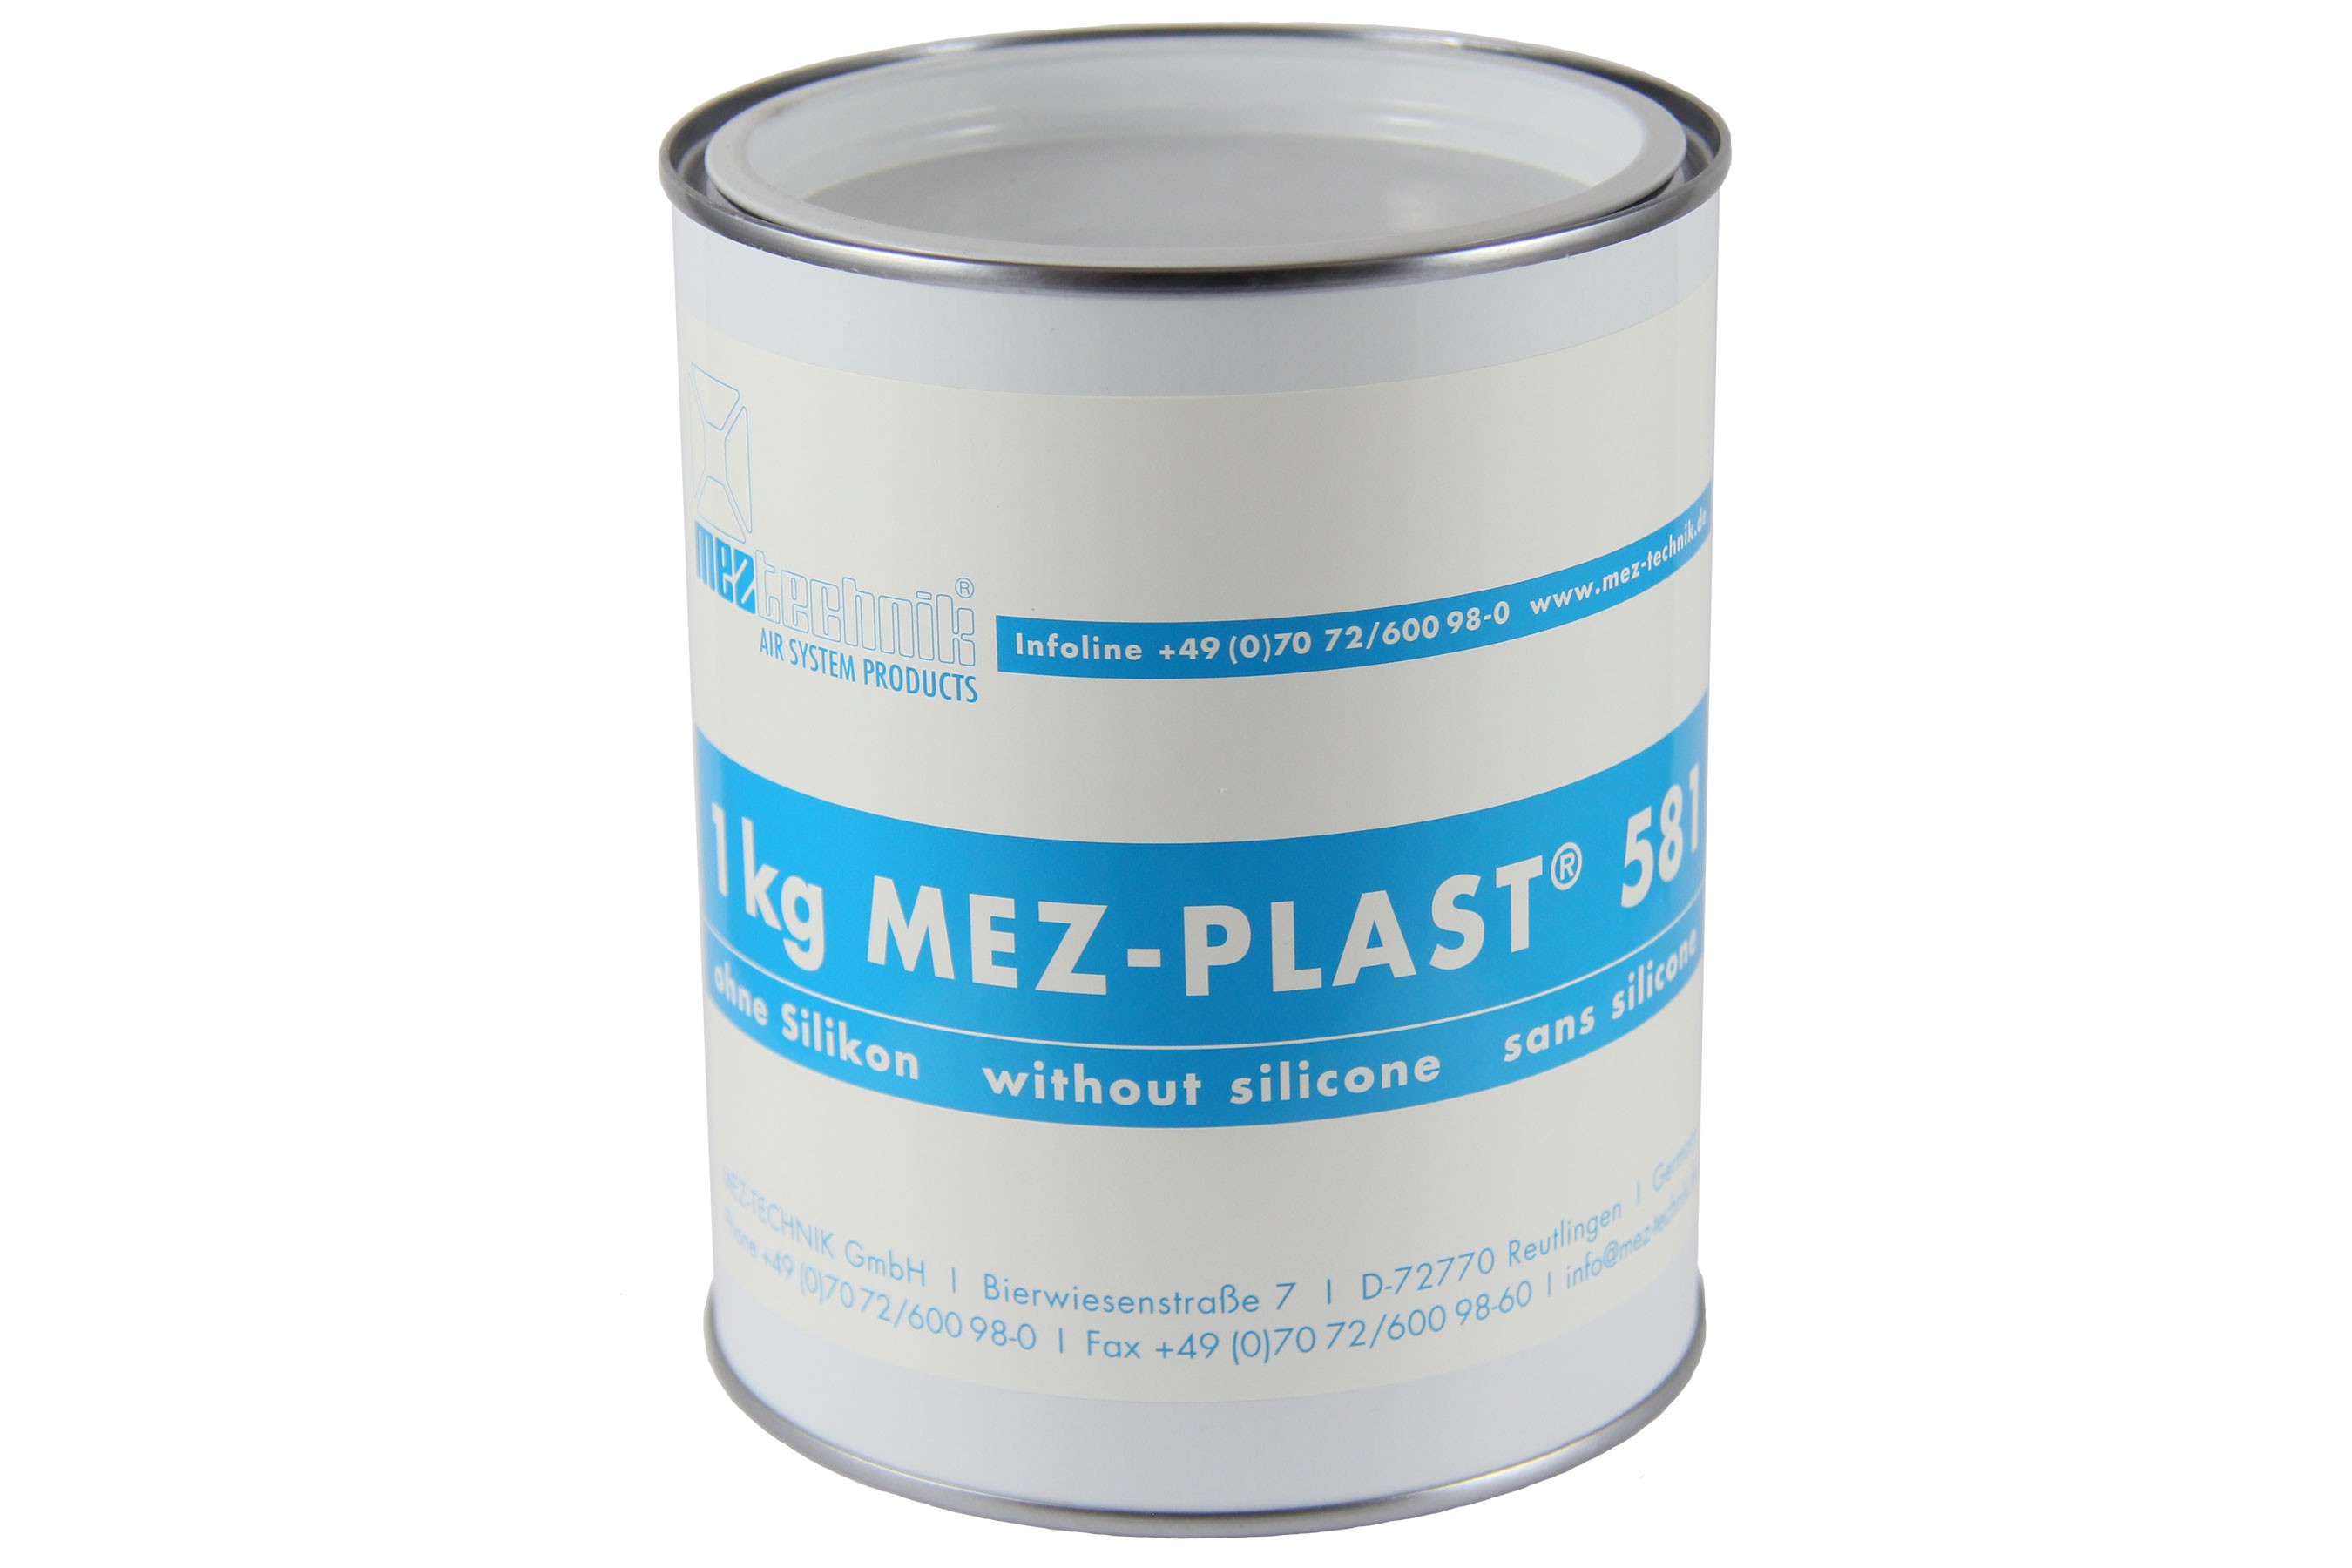 MEZ-PLAST 580 - 1 kg bucket